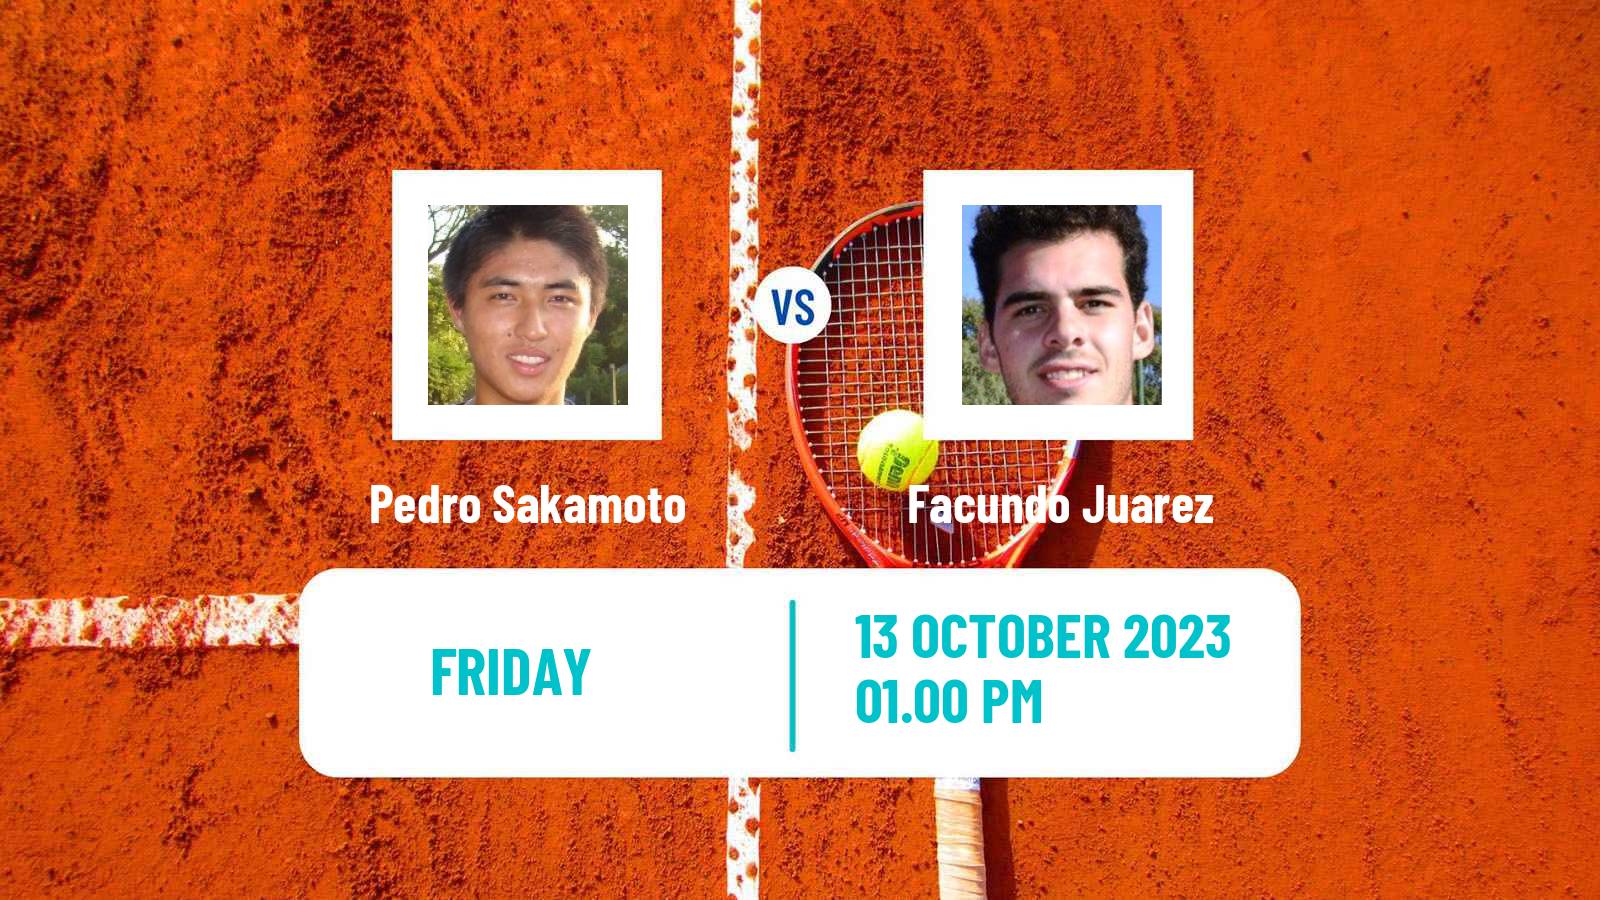 Tennis ITF M25 Lajeado Men Pedro Sakamoto - Facundo Juarez